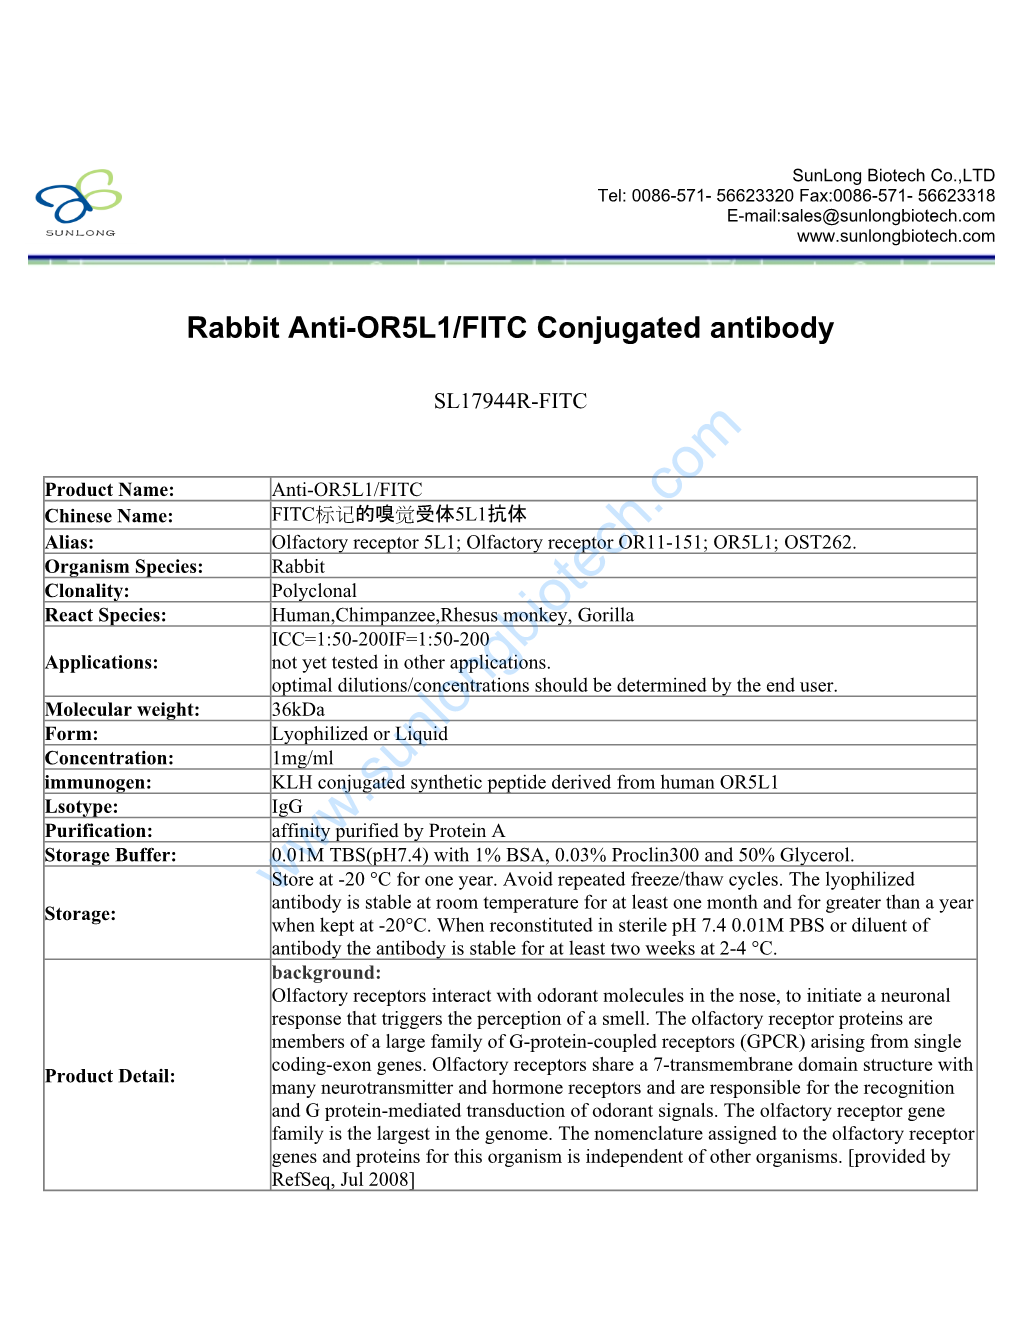 Rabbit Anti-OR5L1/FITC Conjugated Antibody-SL17944R-FITC